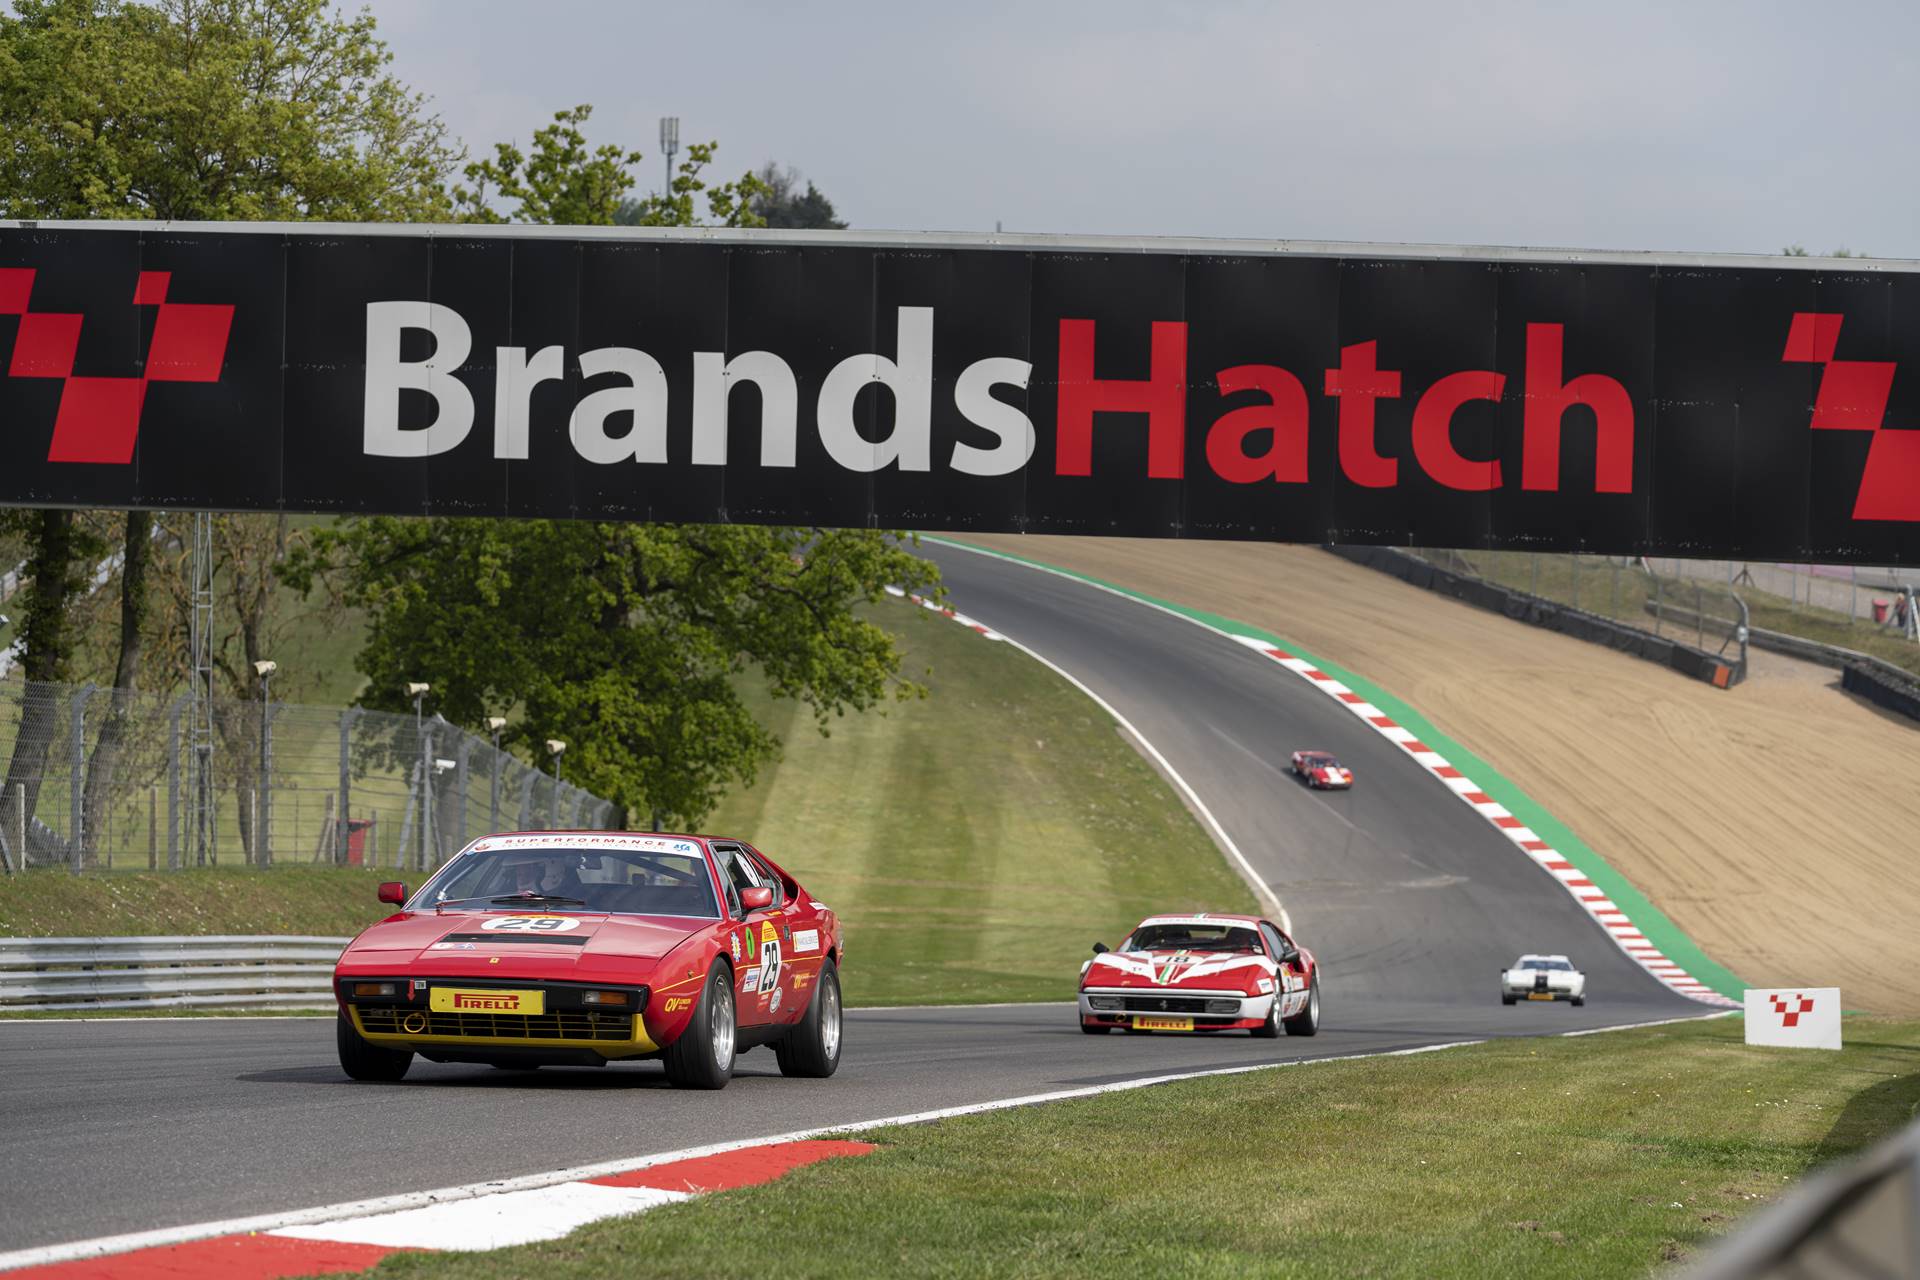 Ferrari Challenge UK 2020 Welcomes Visitors To Brands Hatch Race Weekend 25-26 July 2020